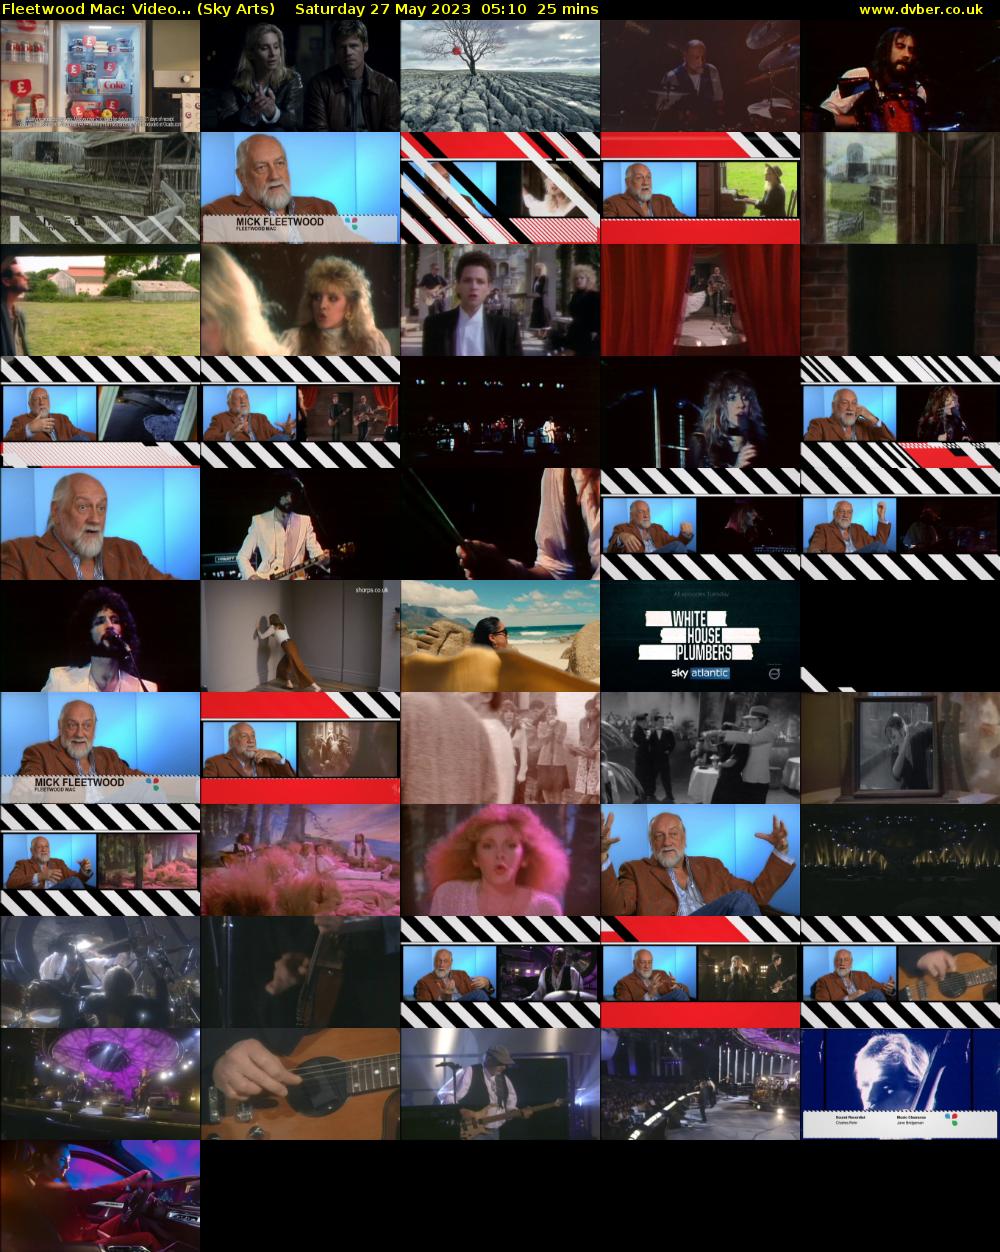 Fleetwood Mac: Video... (Sky Arts) Saturday 27 May 2023 05:10 - 05:35